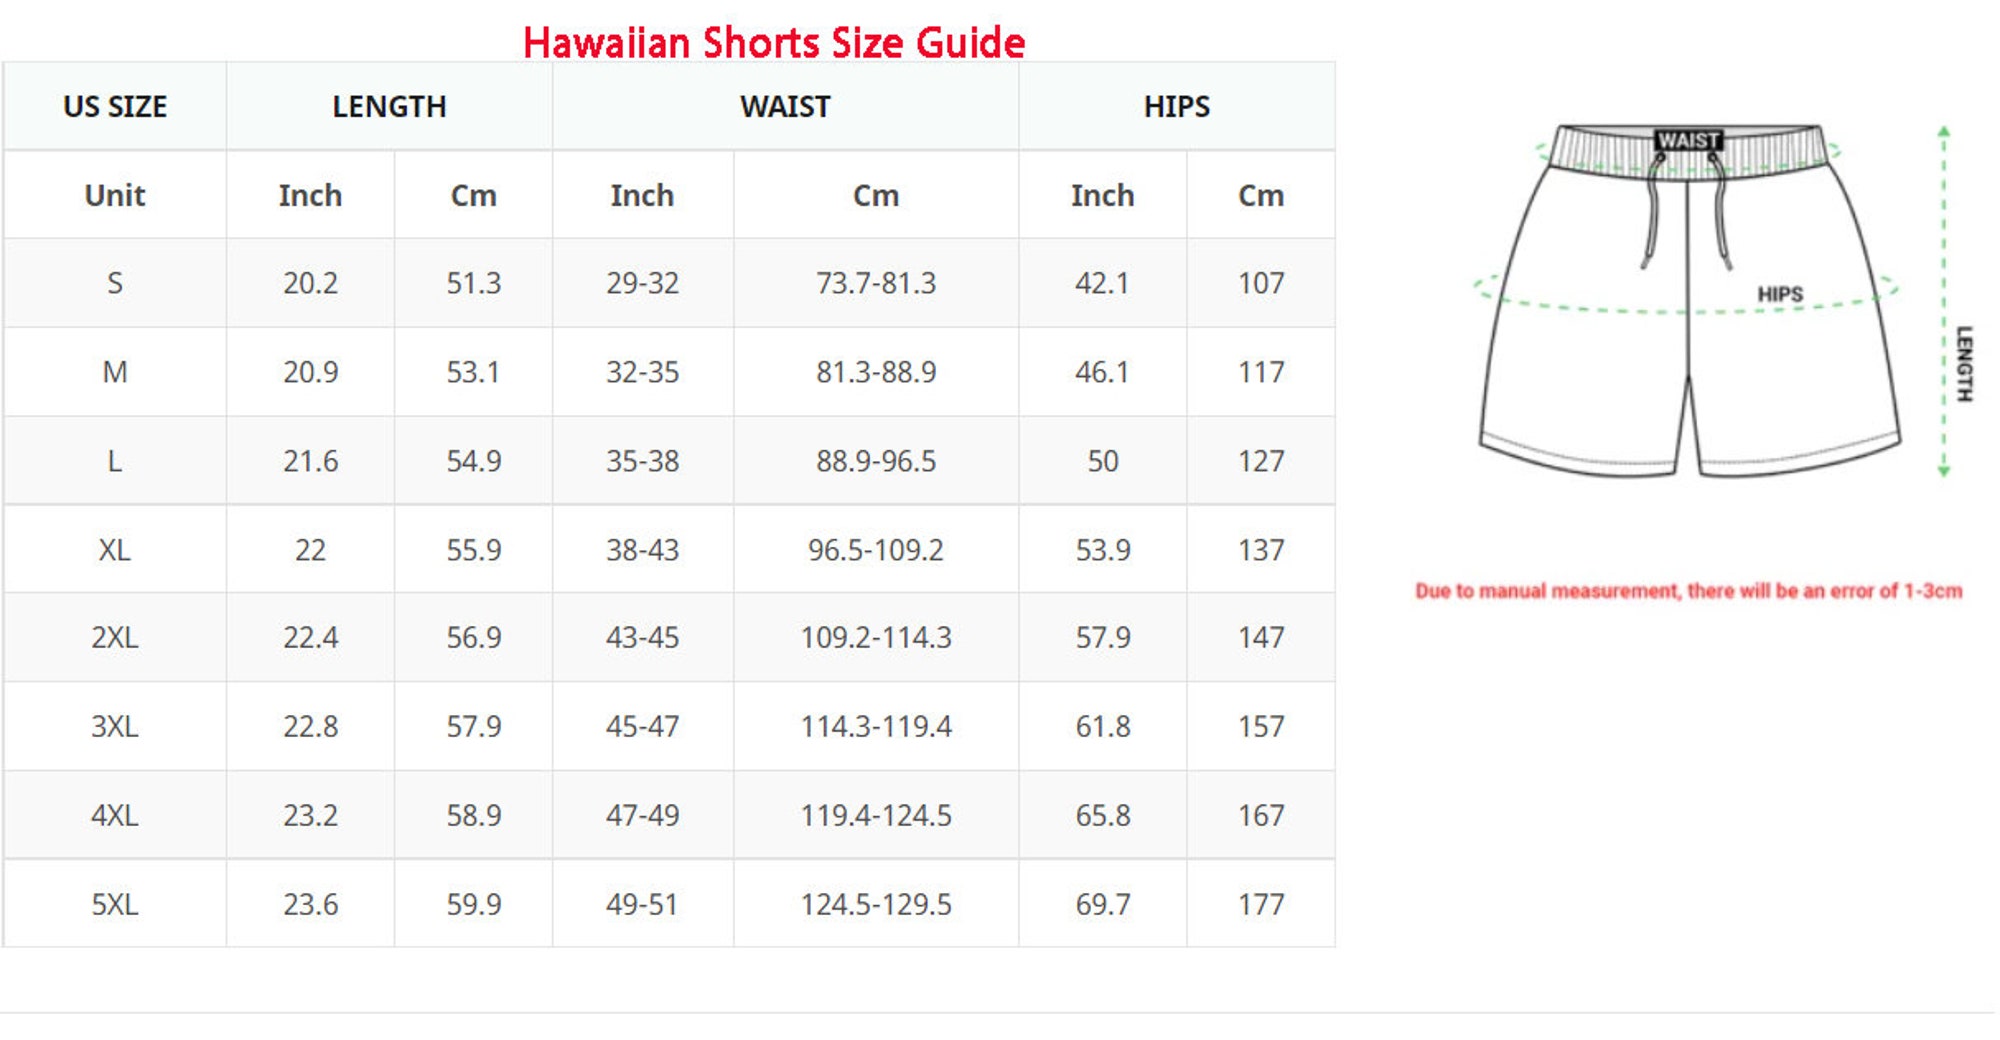 Funny Banana Vintage Shirt Collar Hawaiian Shirt, Hawaiian Short All Over Printed For Men Women- Bananas Guitar Aloha Shirt